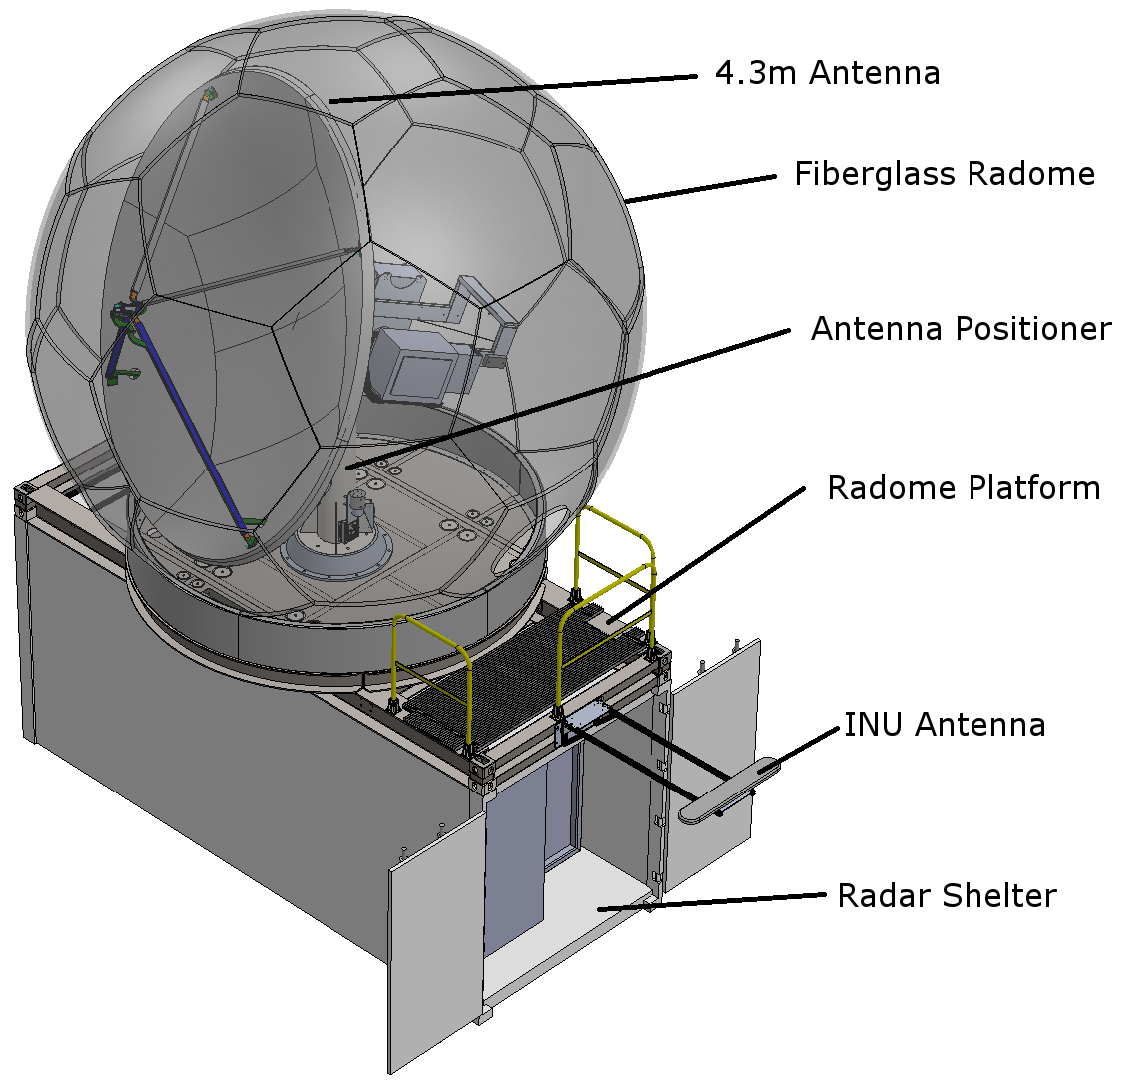 Details about   RCA Weather Radar Antenna Pedestal Extension Mount 1713122-501 